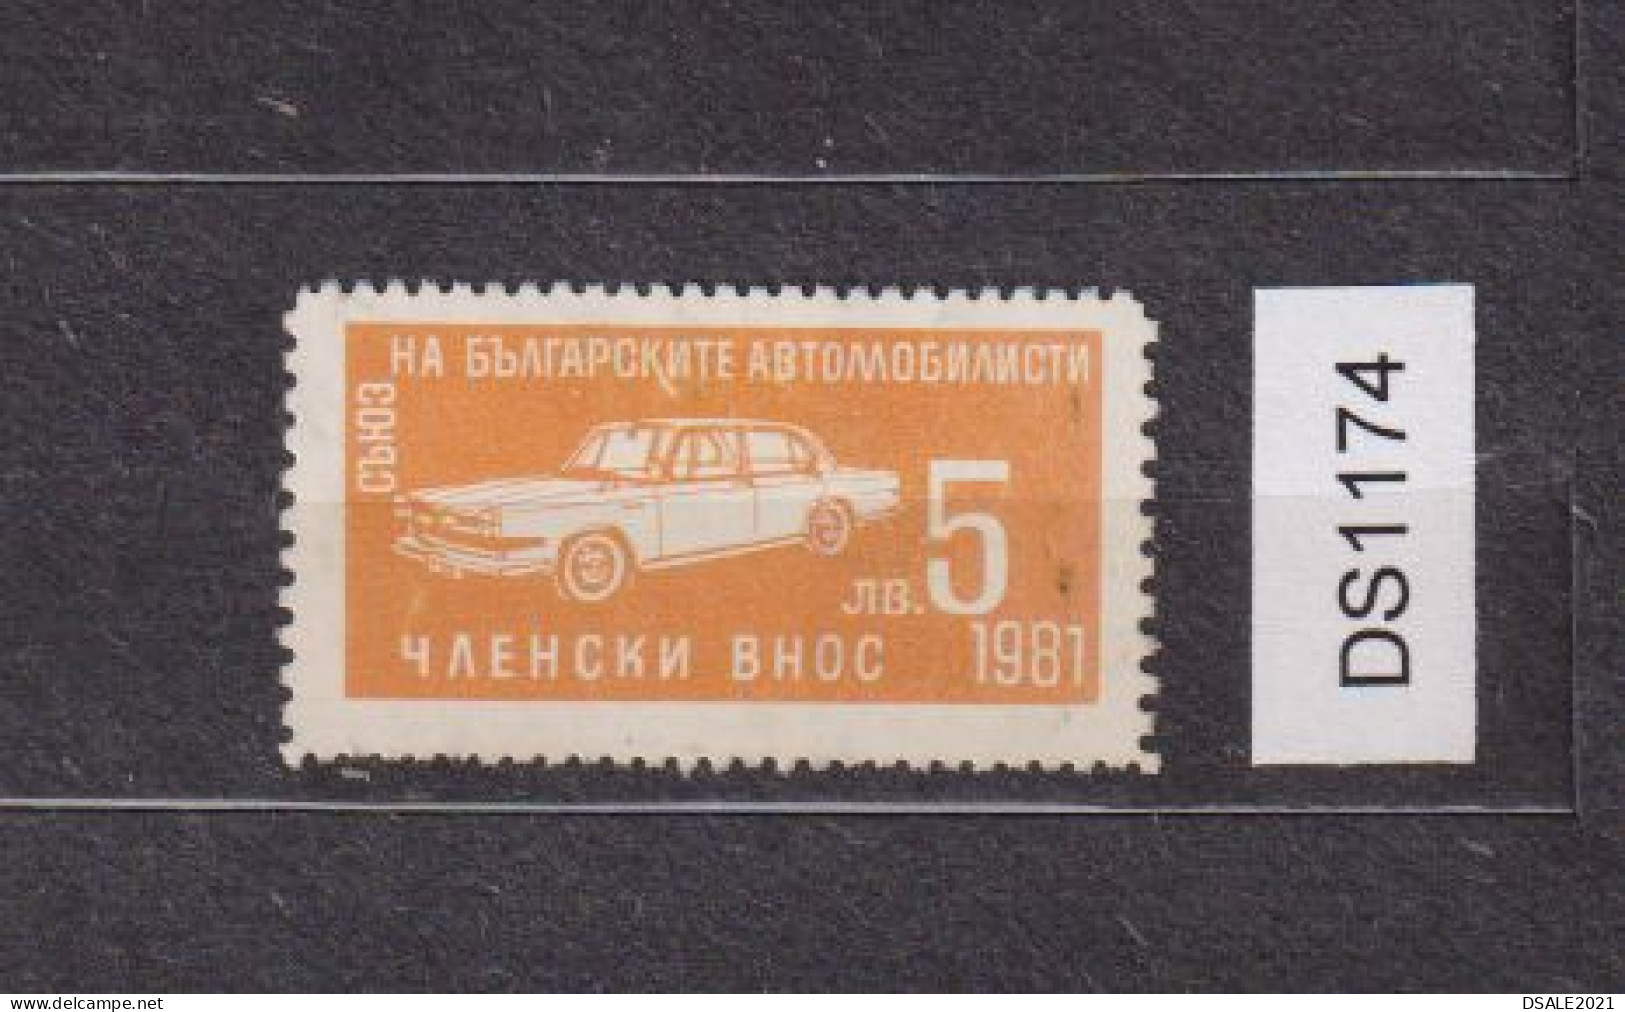 Union Des Automobilistes Bulgares, Union Of Bulgarian Motorists, 1981 Membership Paid Stamp Fiscal Revenue 5Lv. (ds1174) - Official Stamps